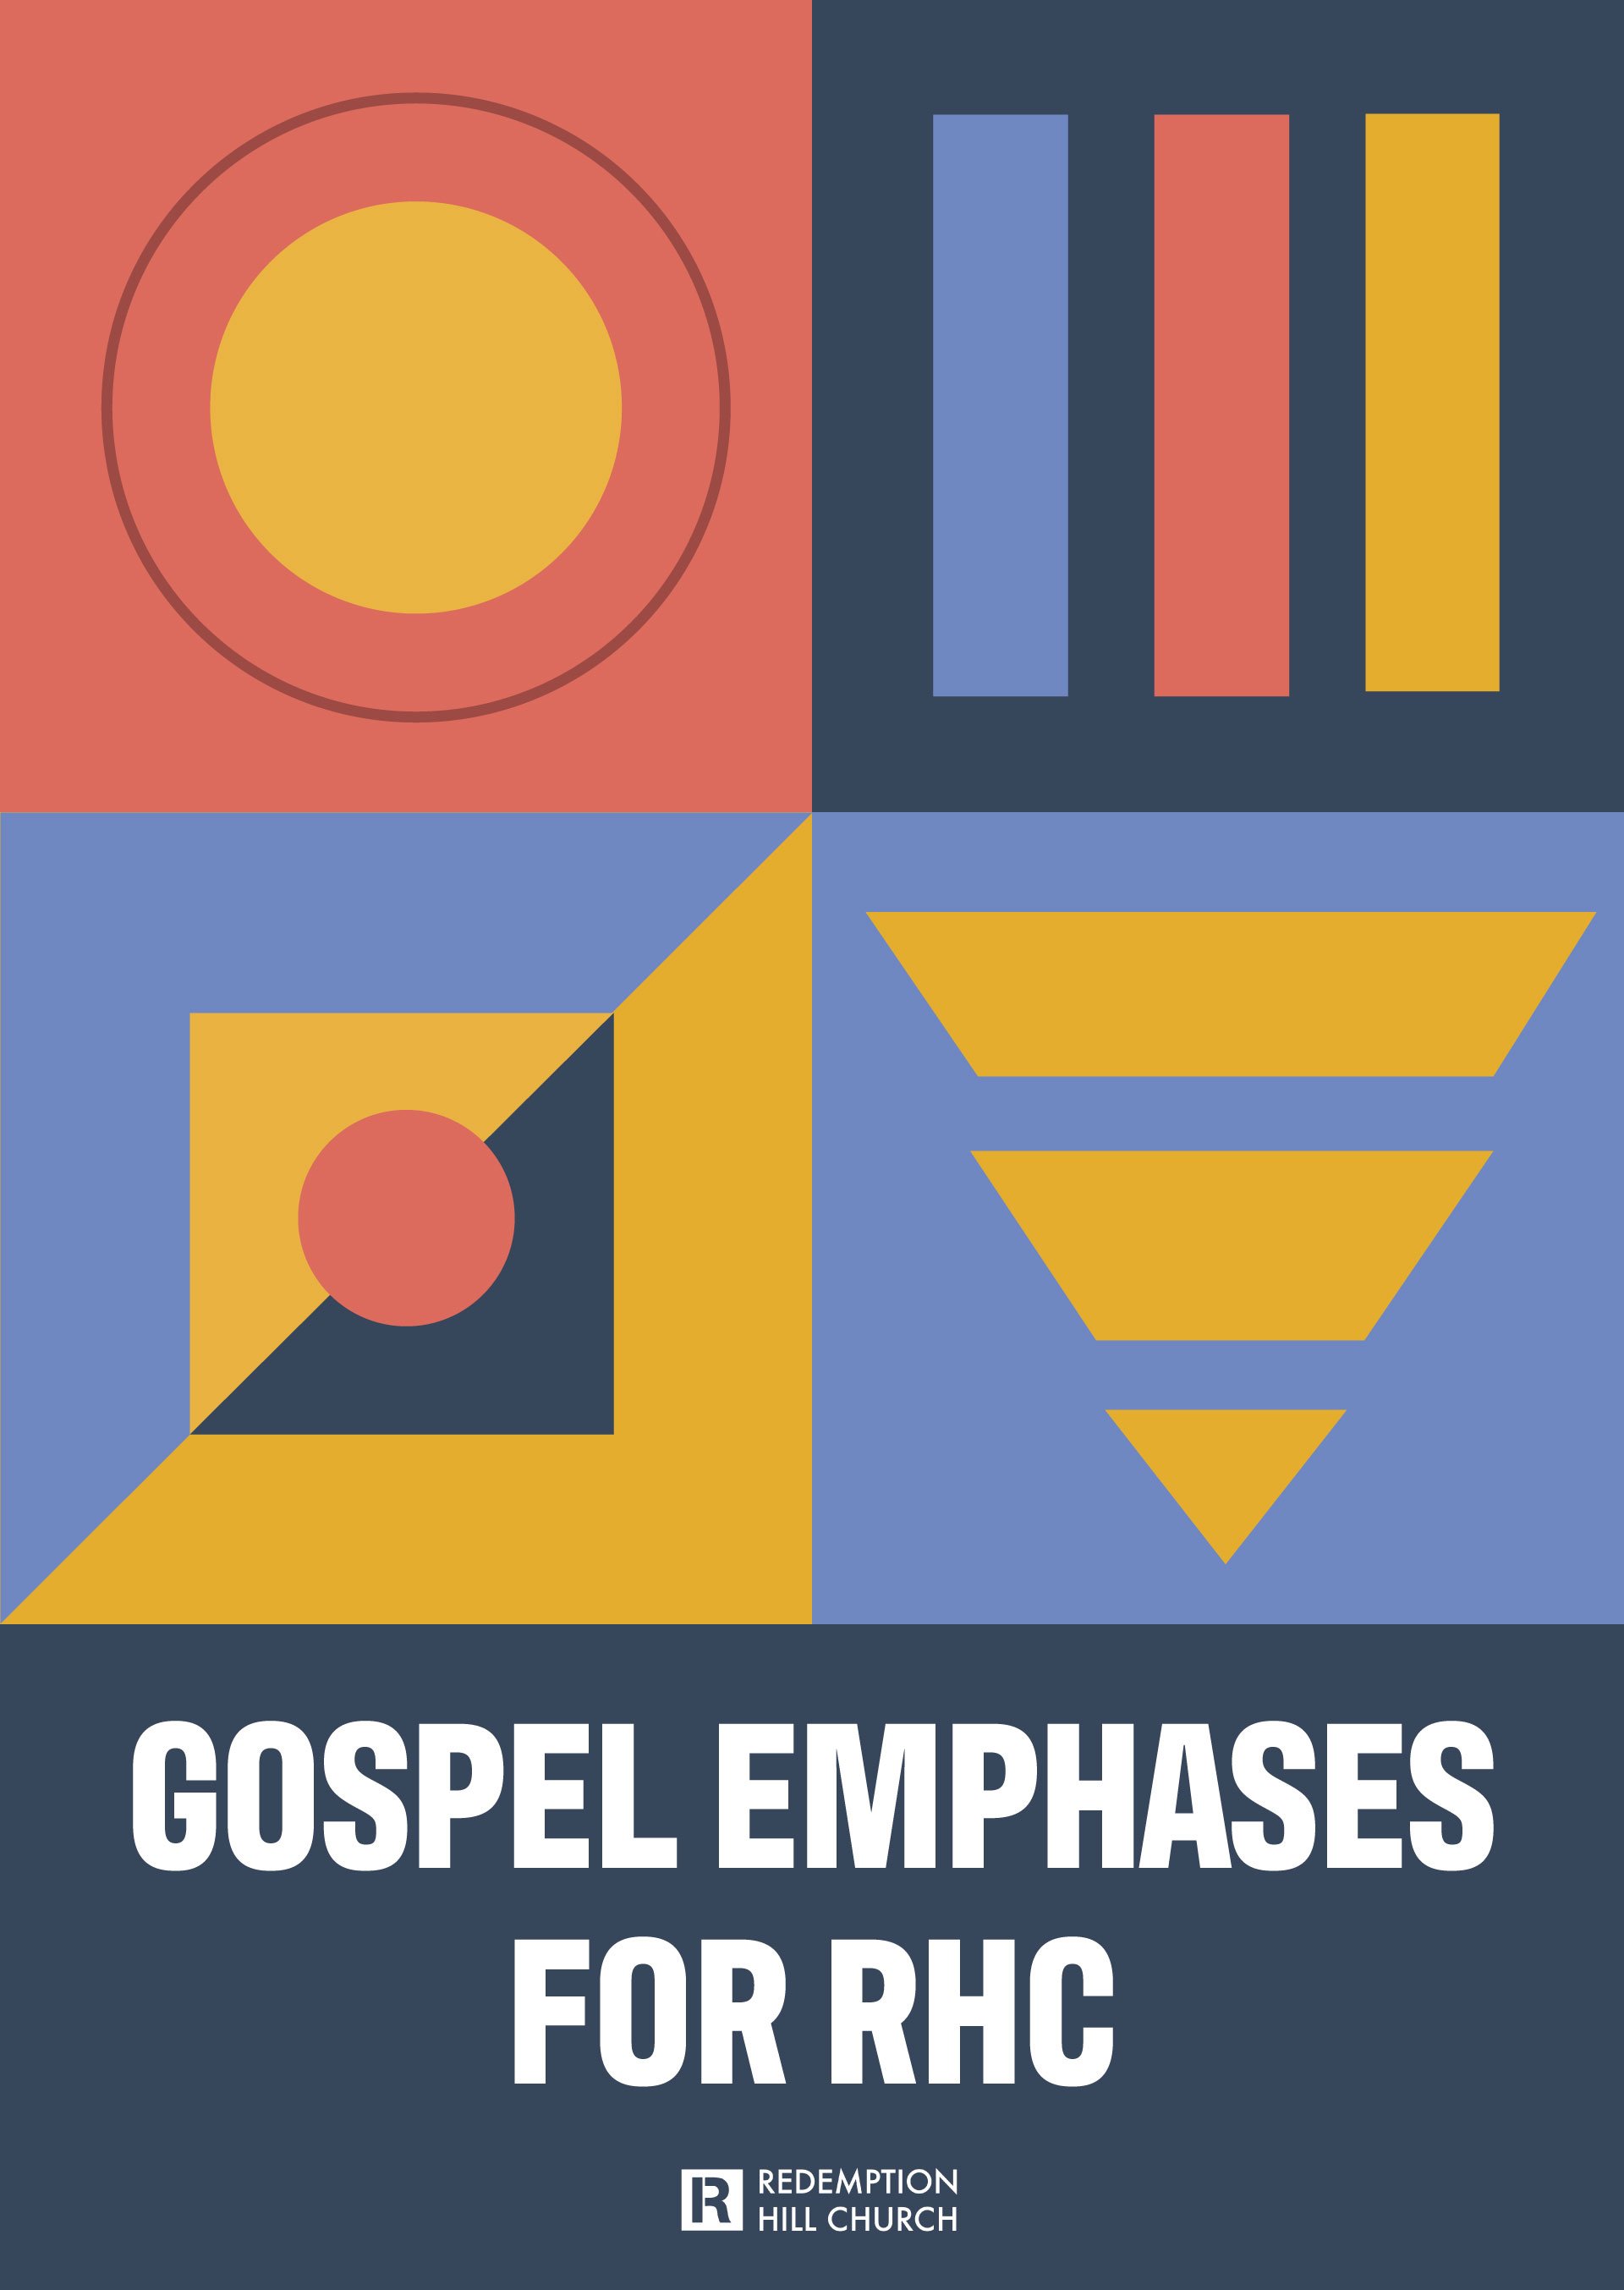 Gospel Emphases (OTOBR Resource)